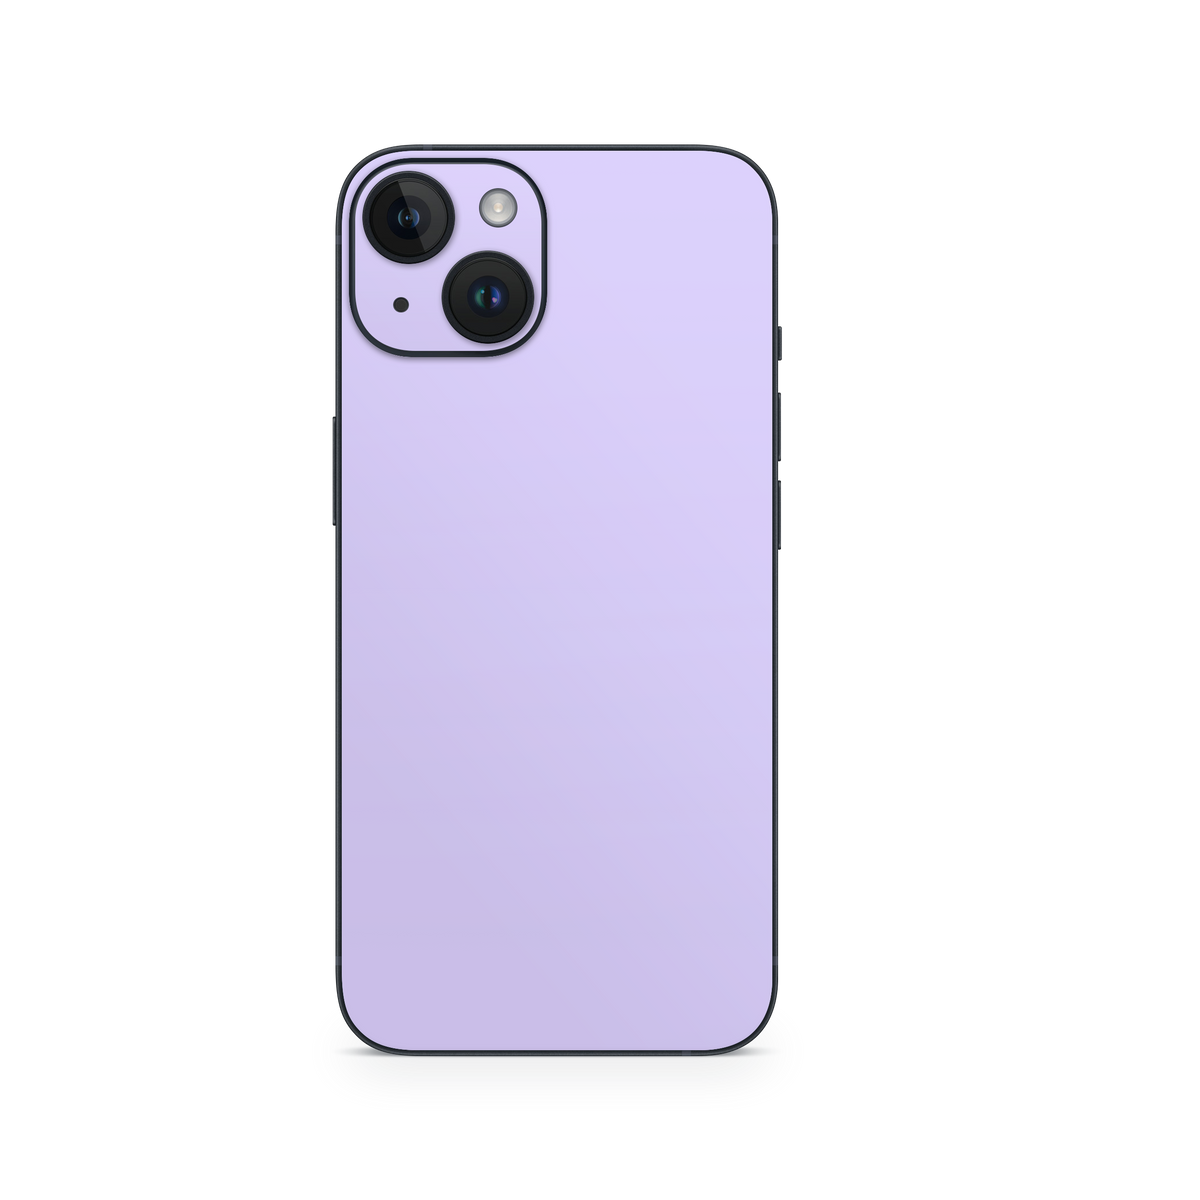 Apple iPhone Light Lavender Skin